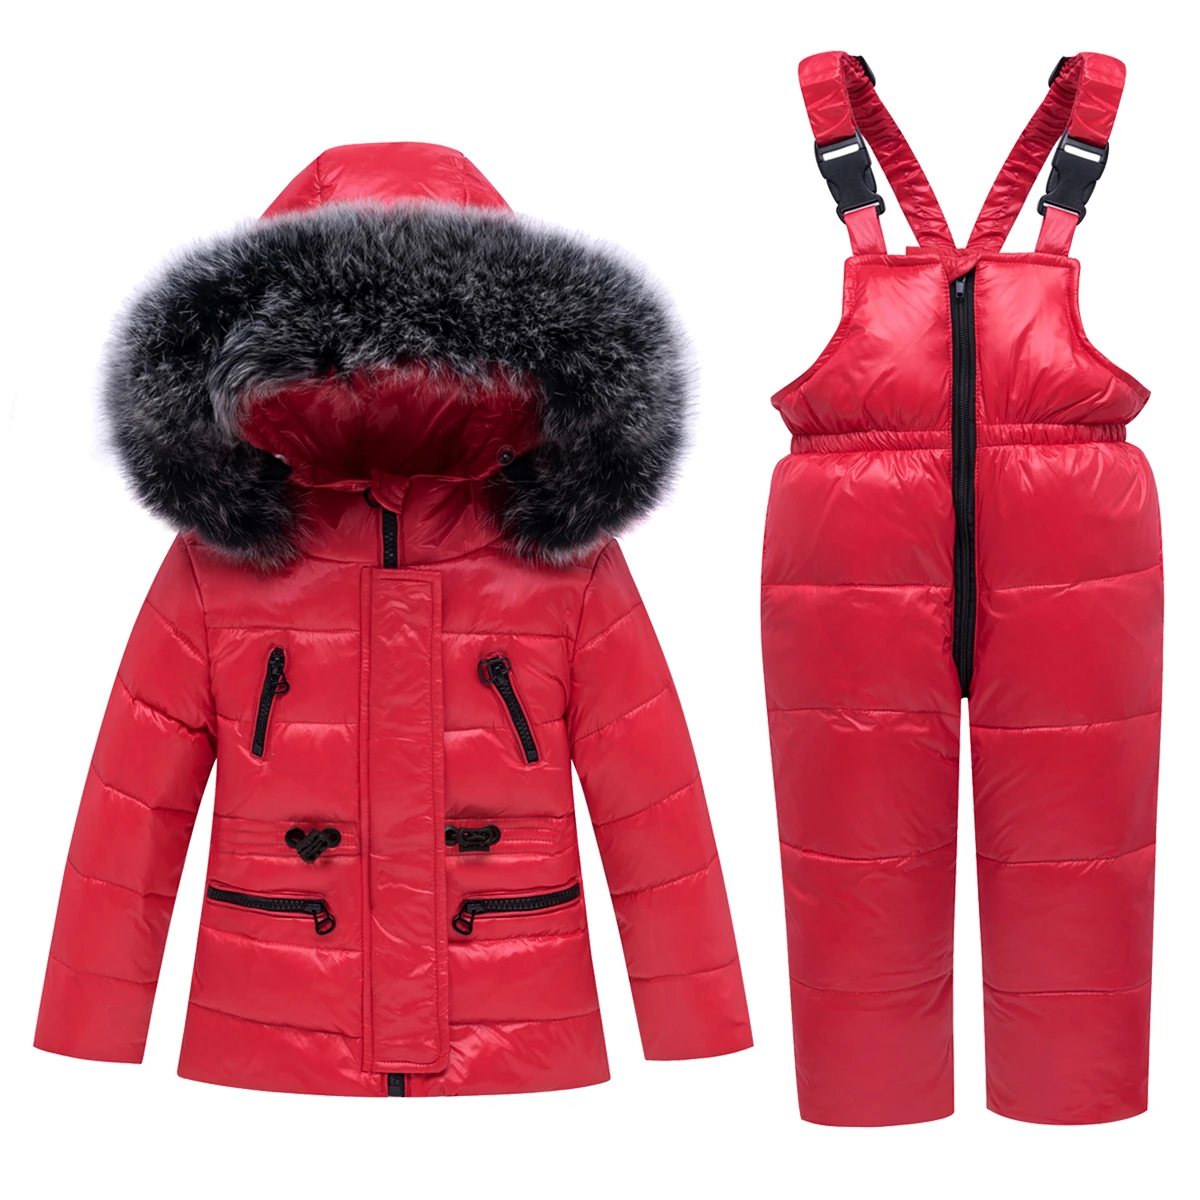 

Children Parka Kids Clothes Ski suit New Winter Baby Boy Girl clothing Set warm Down Jacket Coat Snowsuit Overalls Overcoat